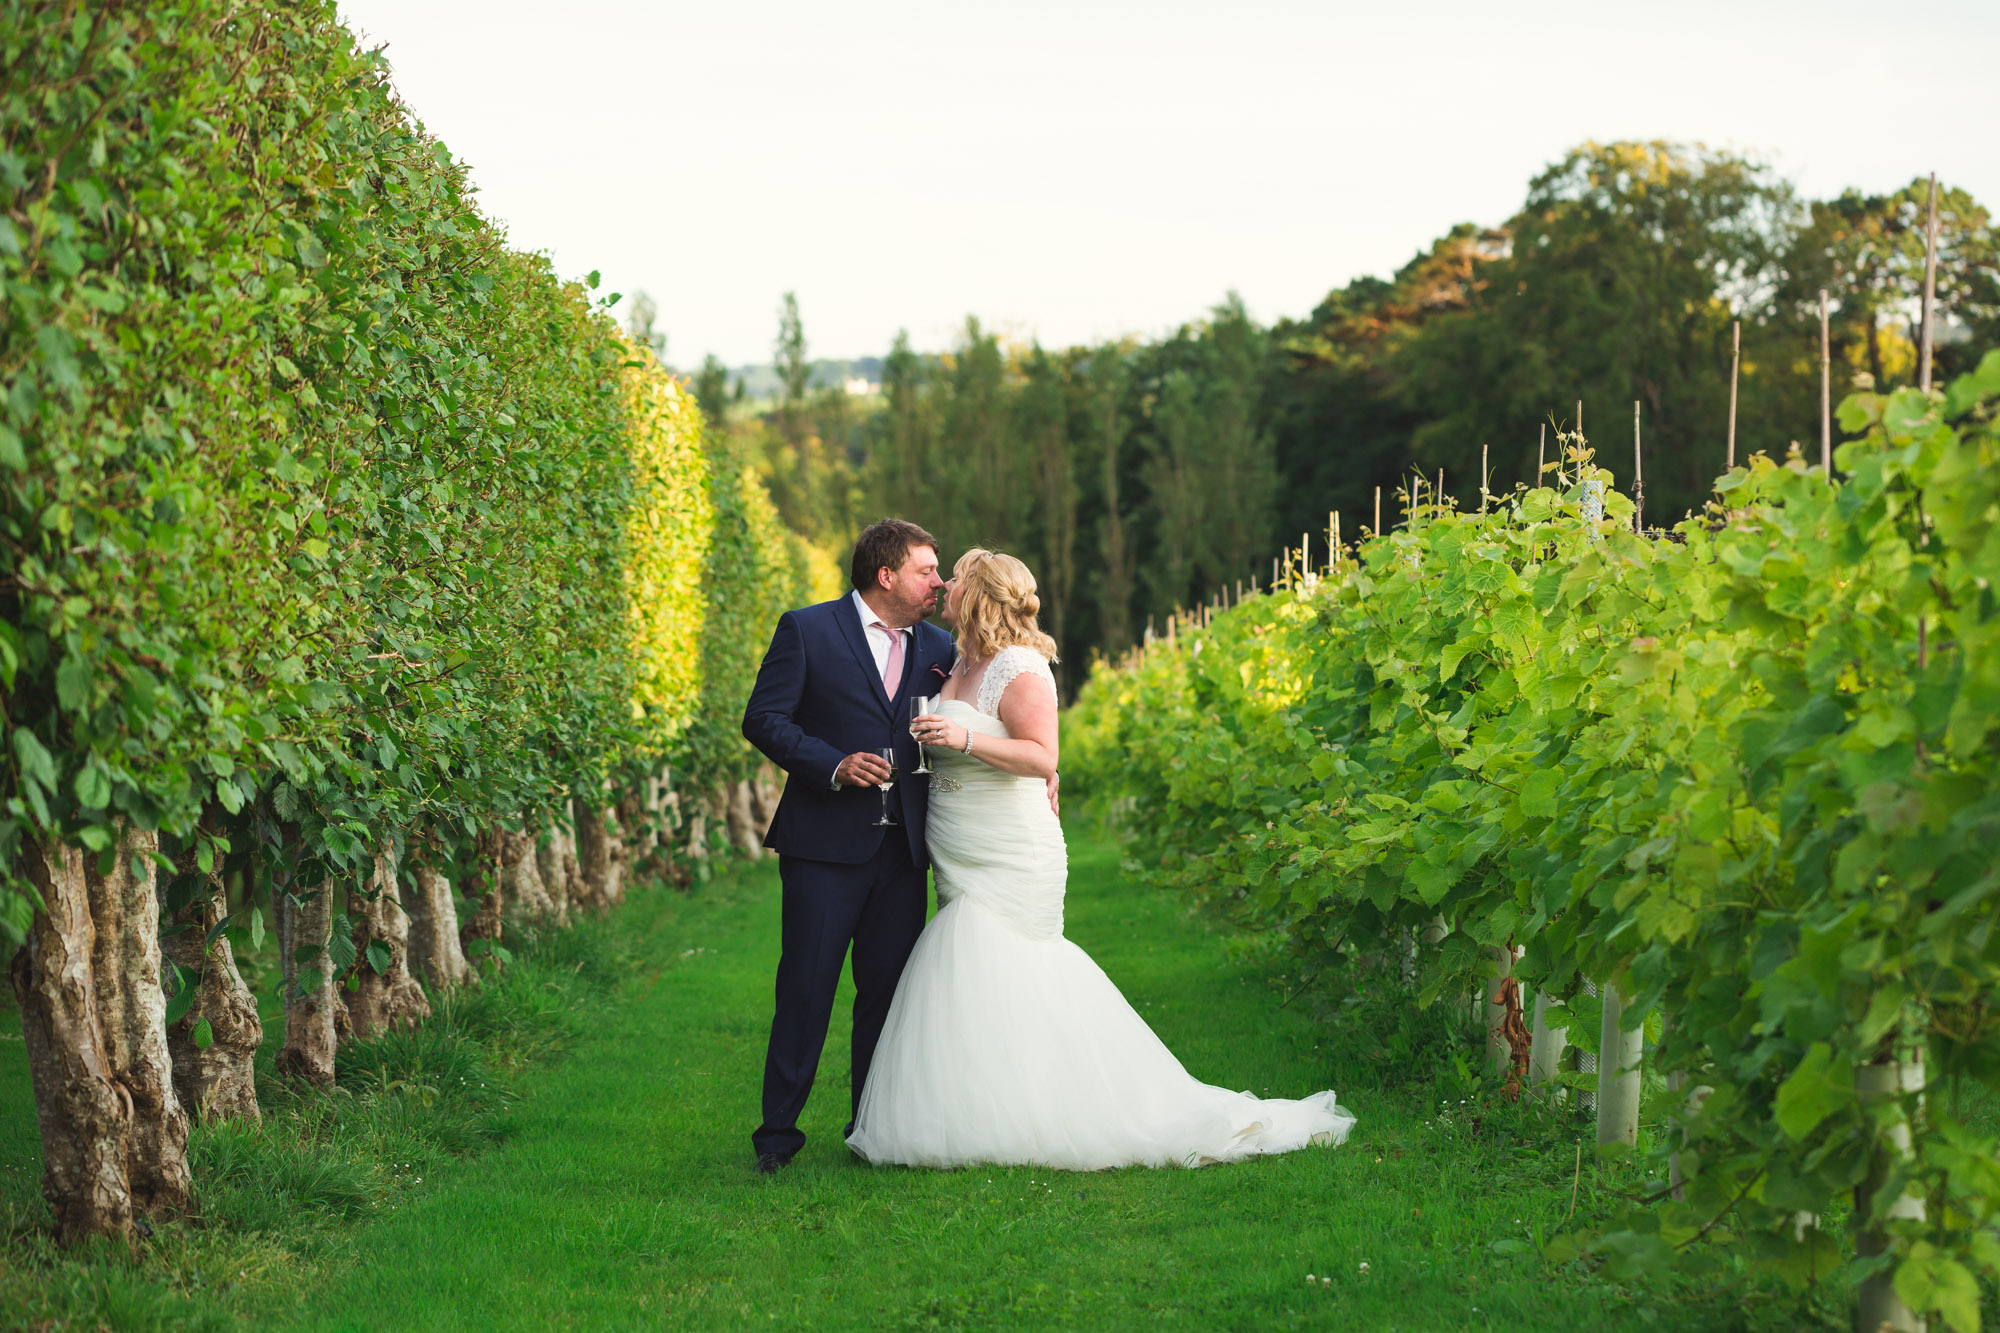 llanerch vineyard wedding photos, wedding photographer Cardiff, Vale of Glamorgan, South Wales